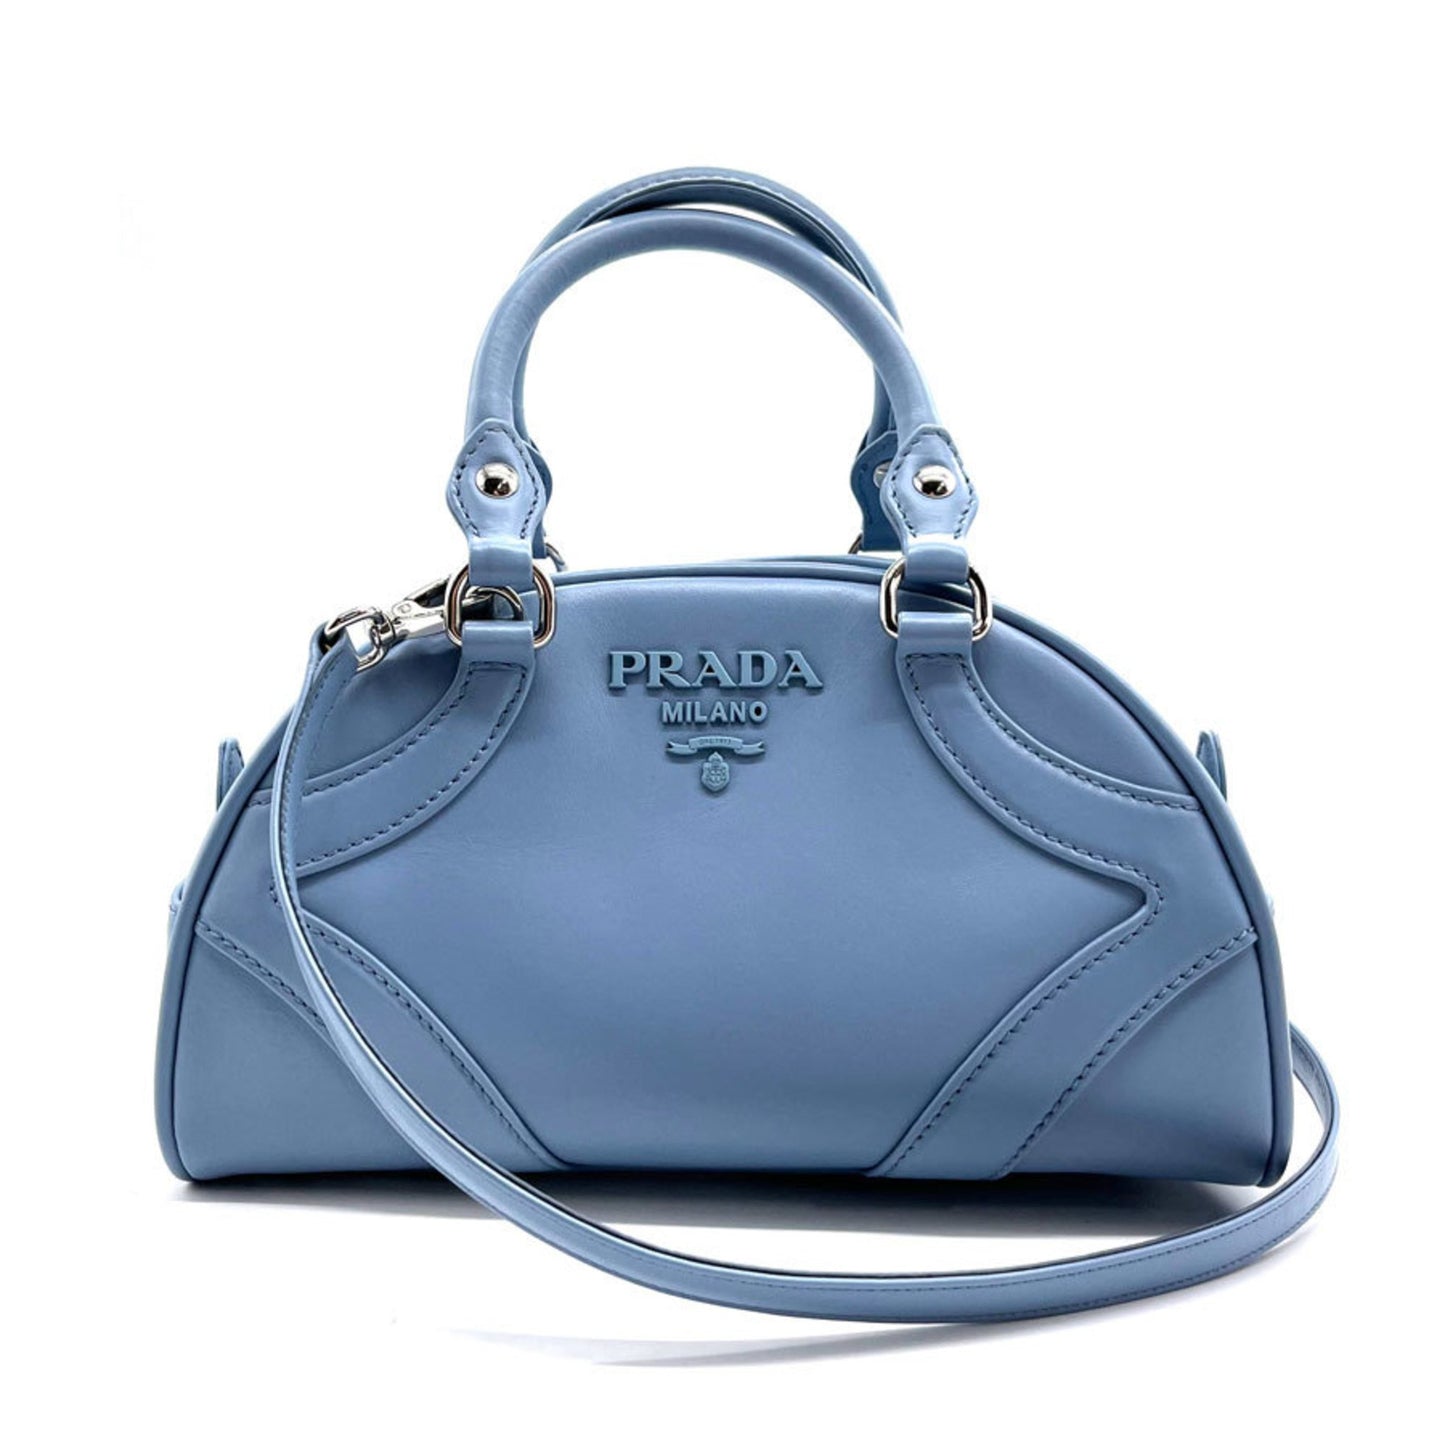 Prada Women's Blue Leather Handbag with Dust Bag and Shoulder Strap in Blue